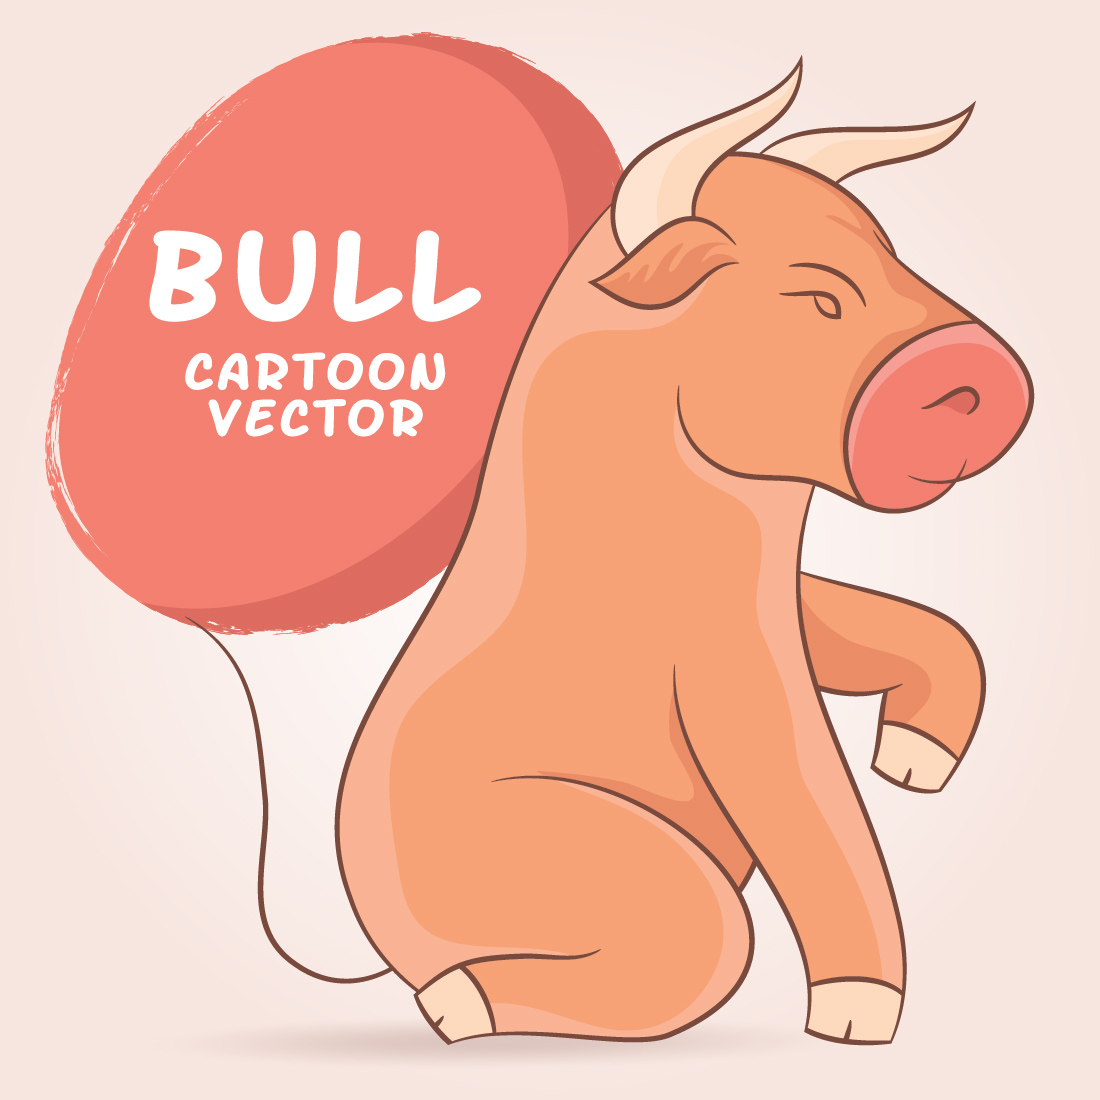 Bull or Buffalo Cartoon Vector illustration description.